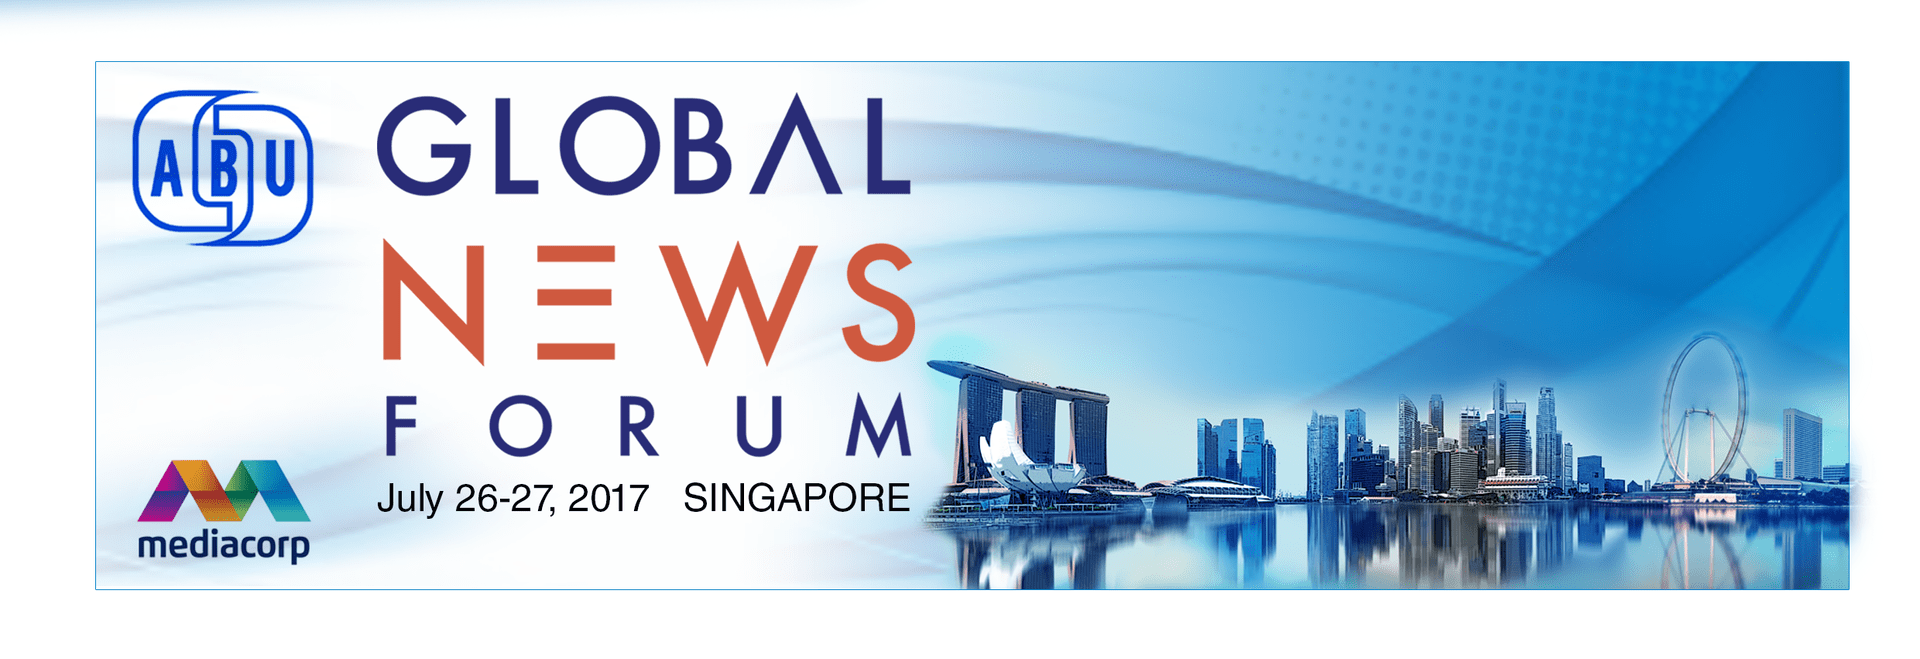 Global News Forum 2017 Singapore - Logo.